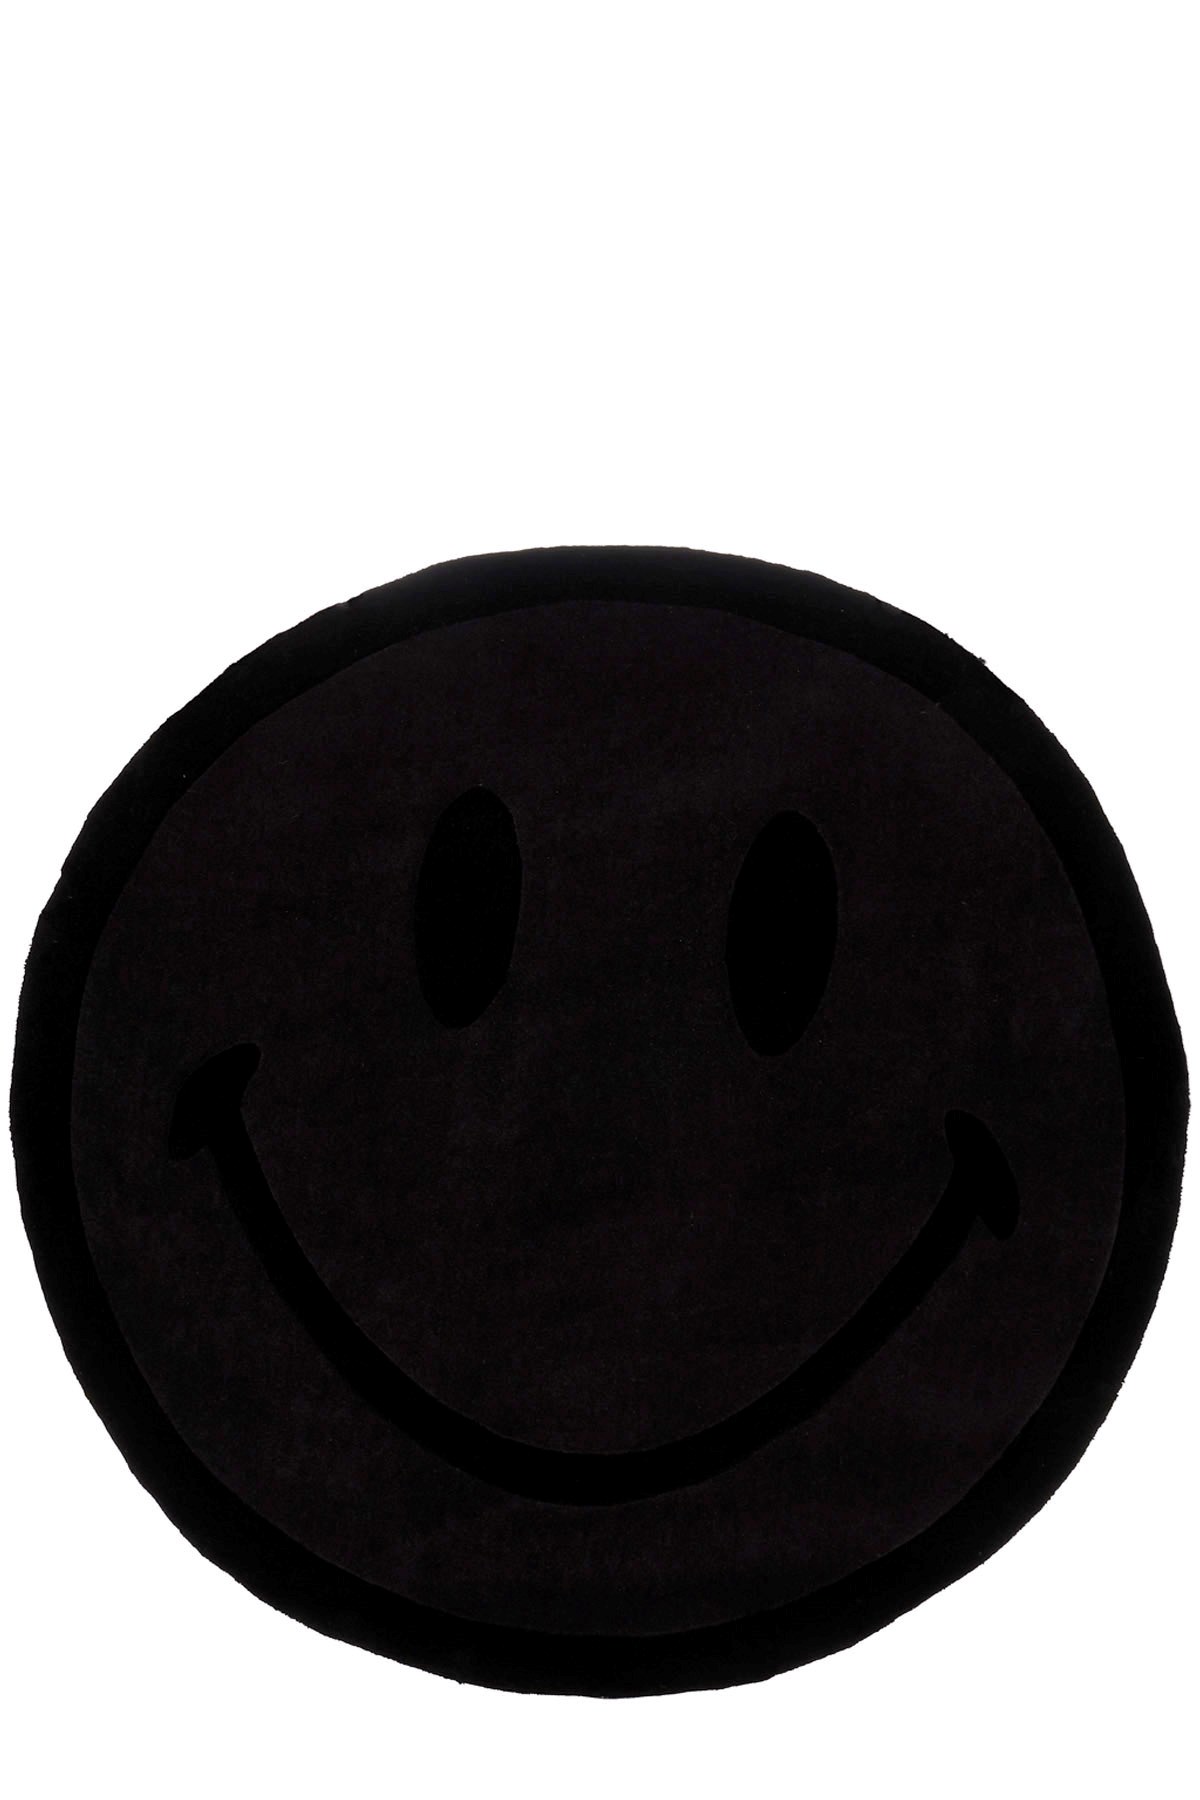 CHINATOWN MARKET 'Smiley’ Carpet